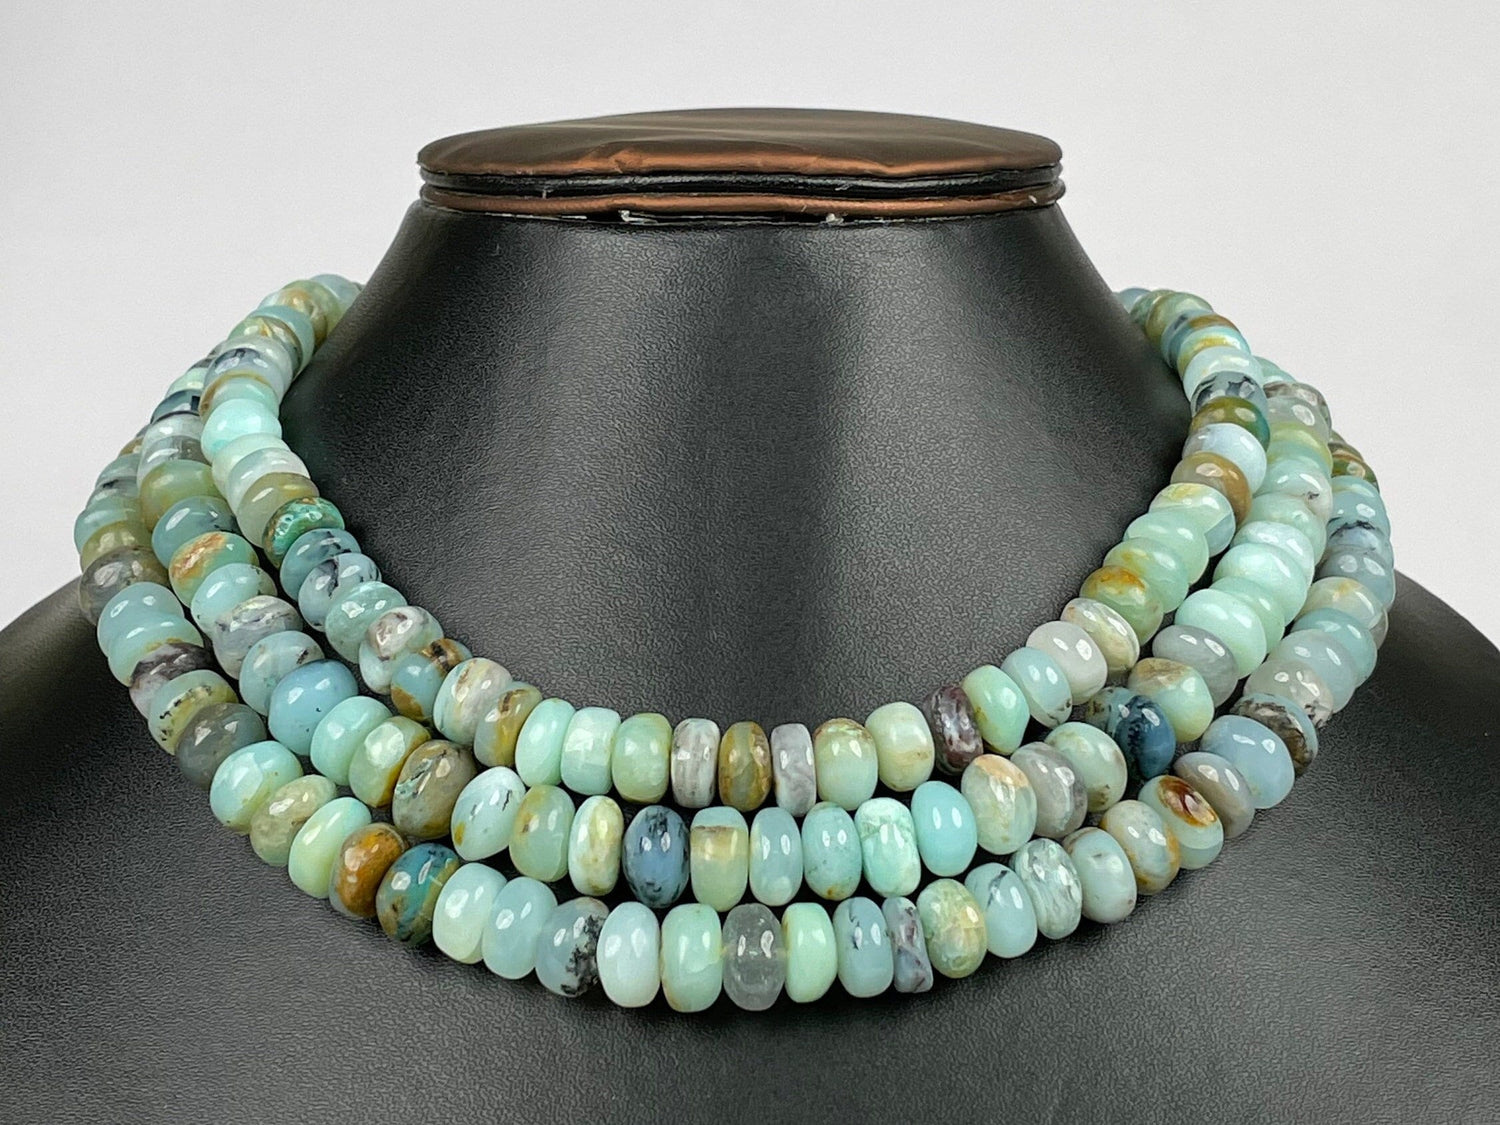 Rondelle beads